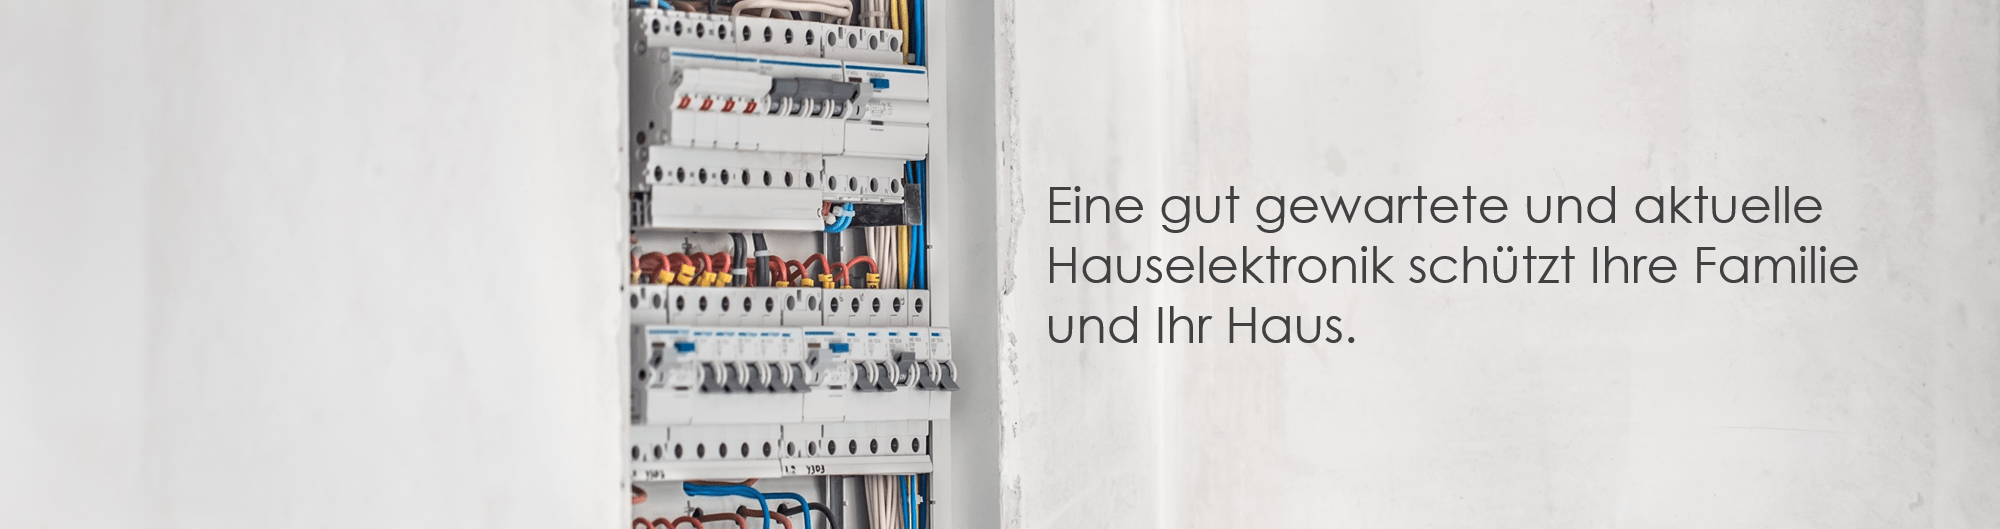 Elektriker Brandenburg Berlin Elektromeisterbetrieb Hauselektronik